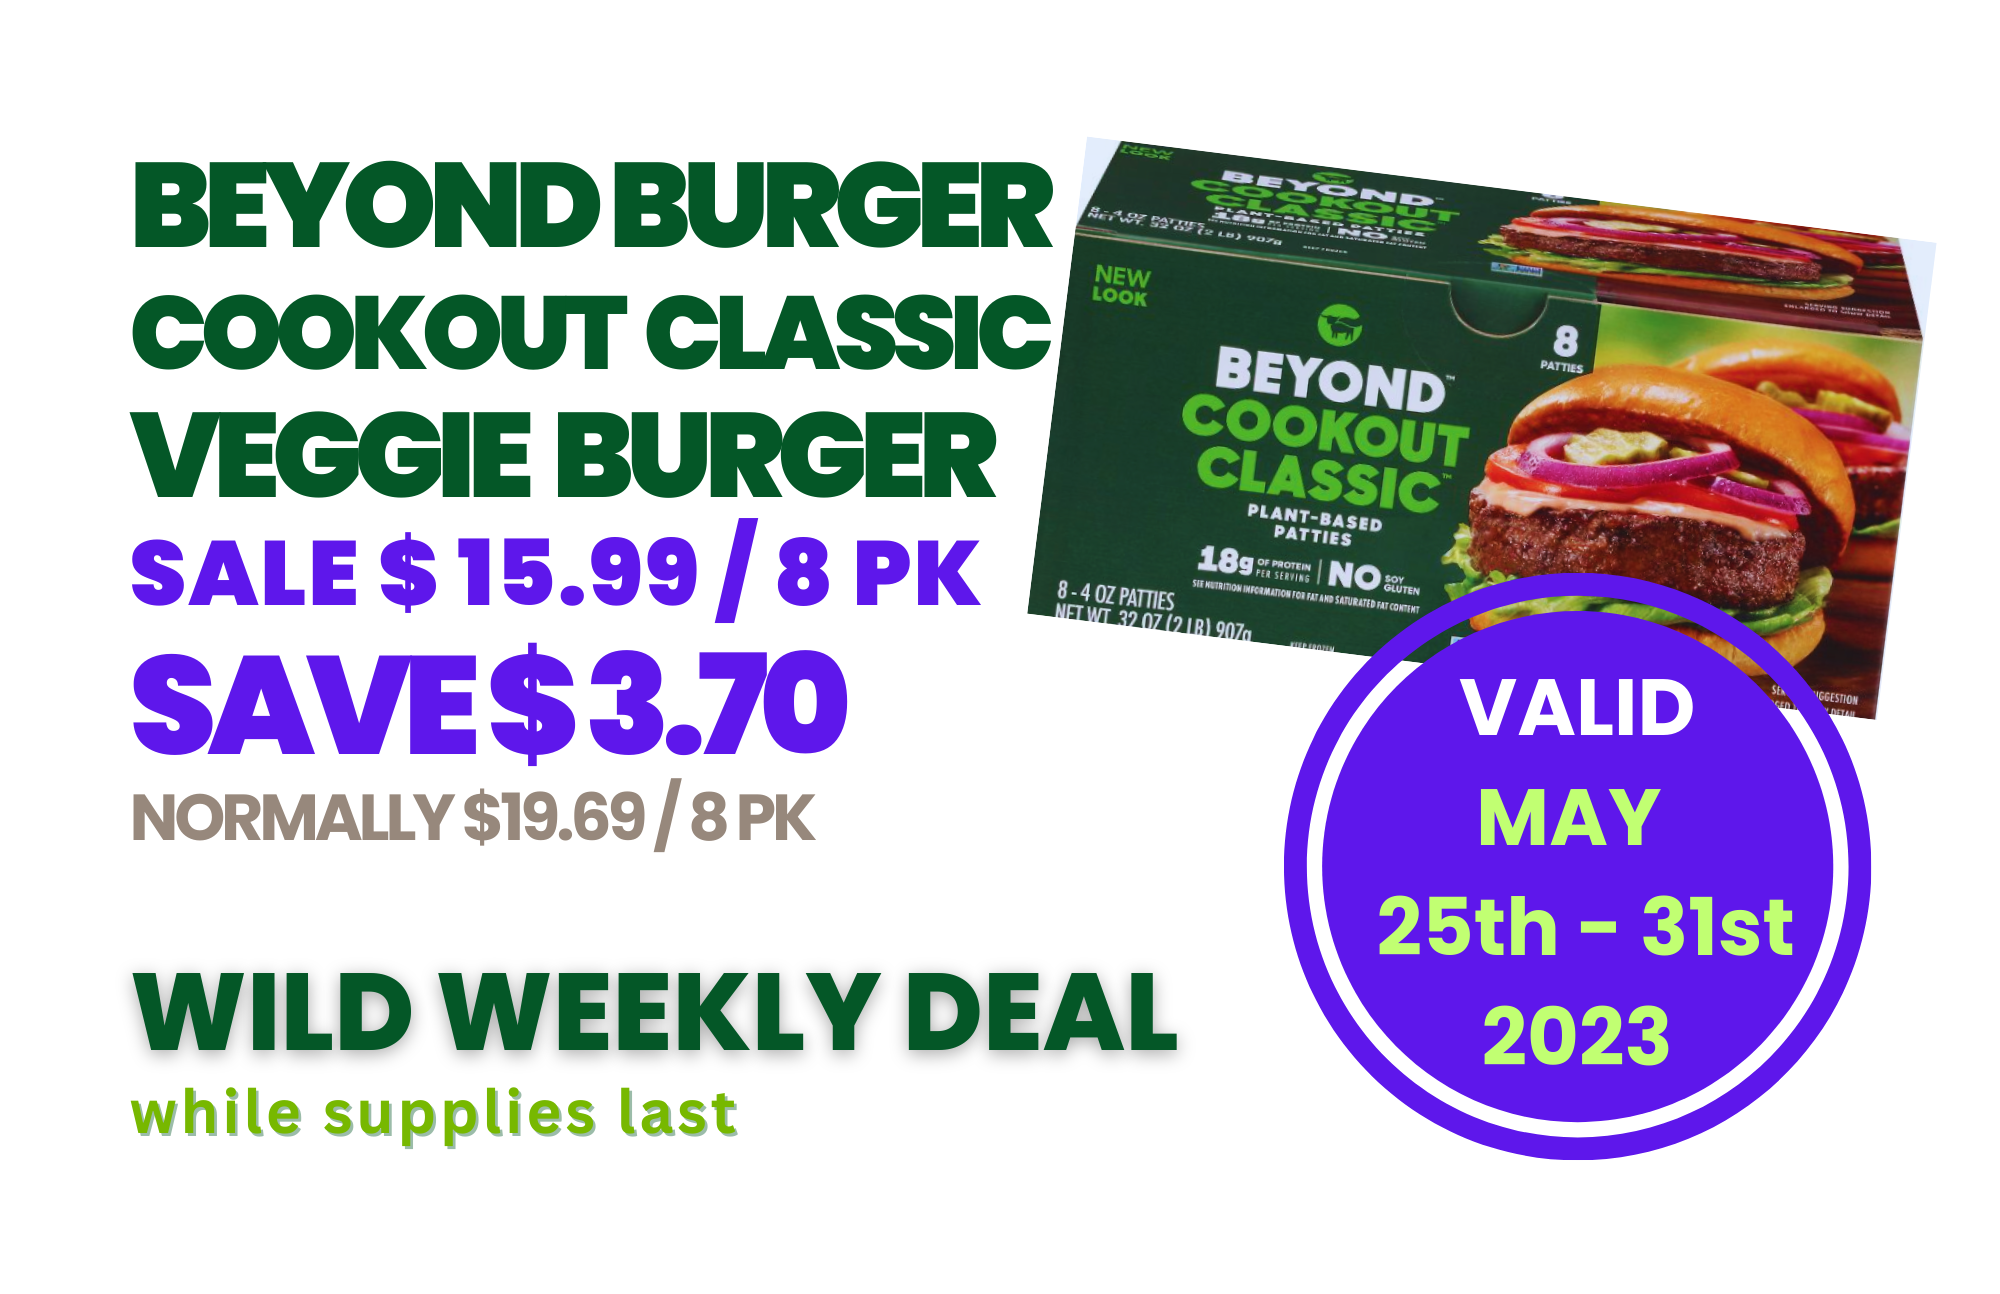 2023-0525-0531 Wild Weekend Deal Beyond Burger Cookout Classic Veggie Burger.png